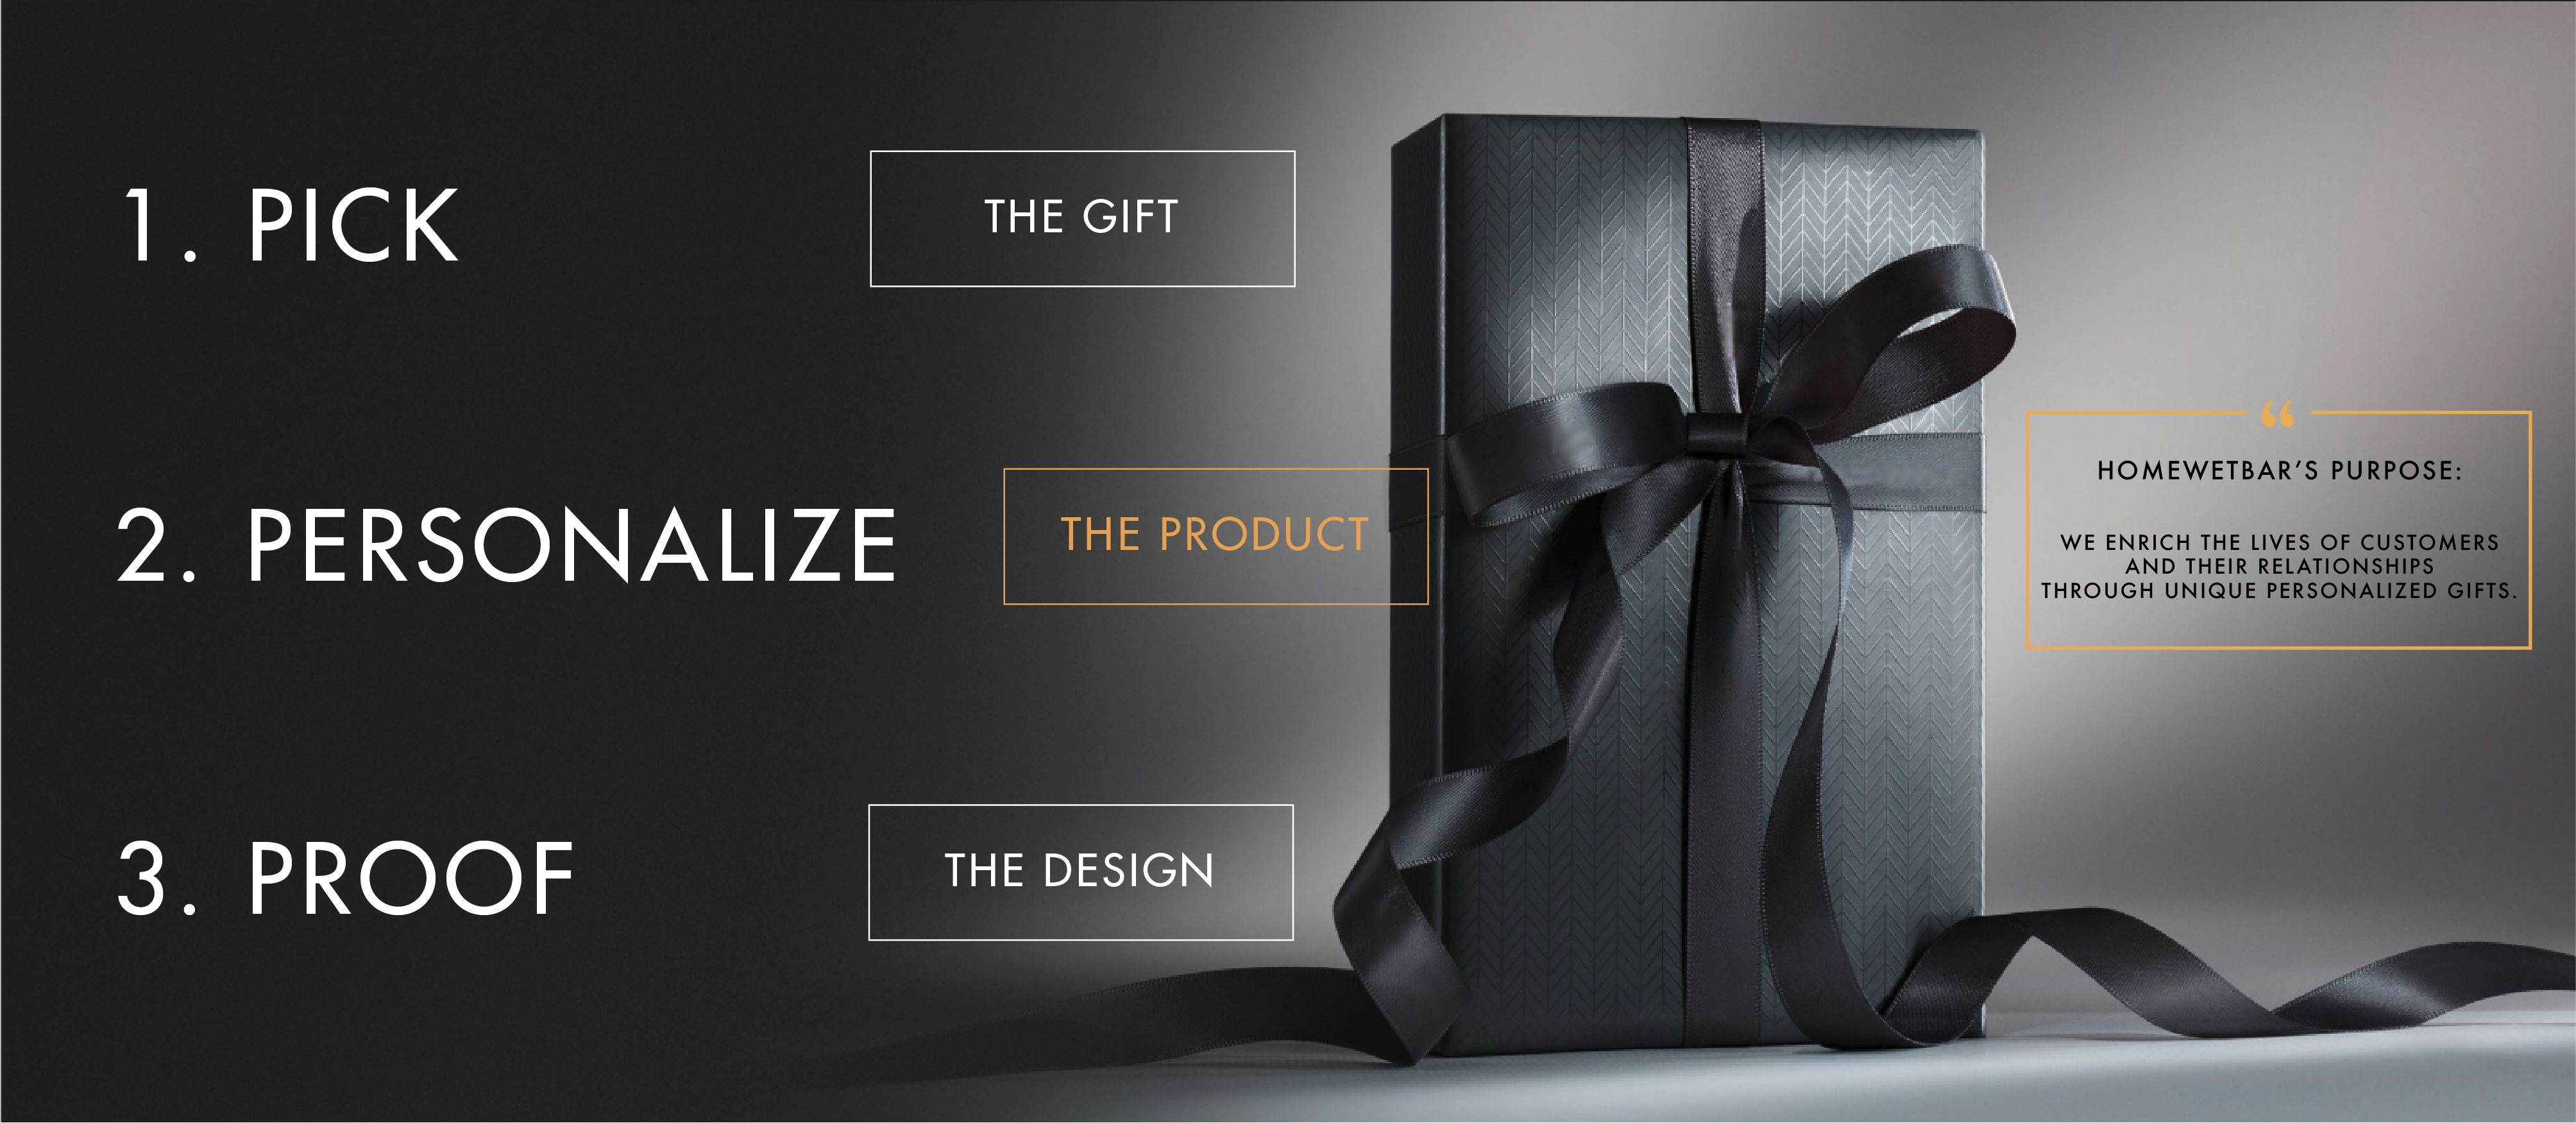 Personalized Corporate Gift Program